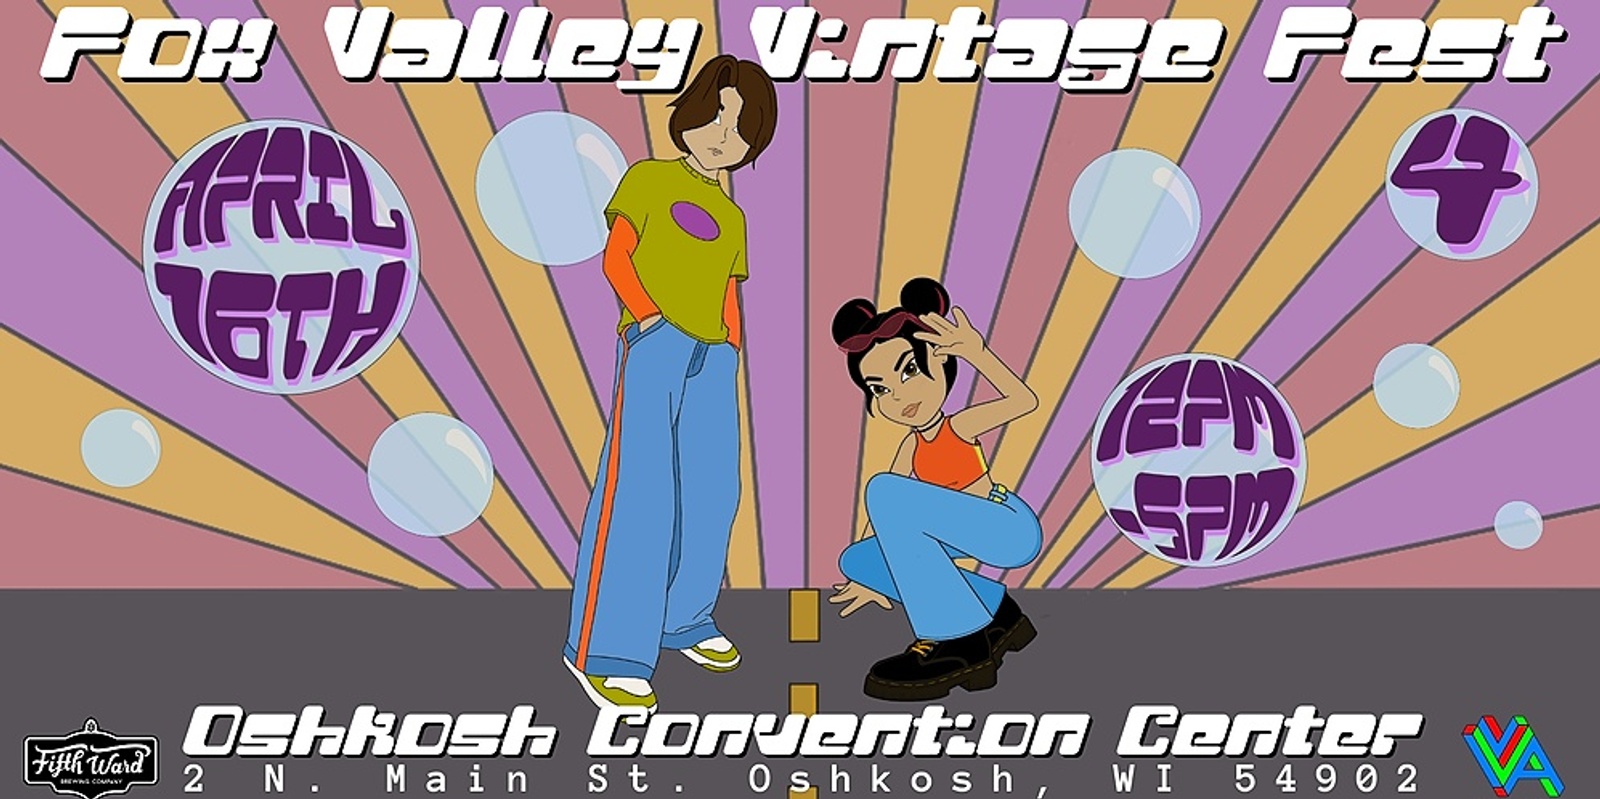 Banner image for Fox Valley Vintage Fest 4